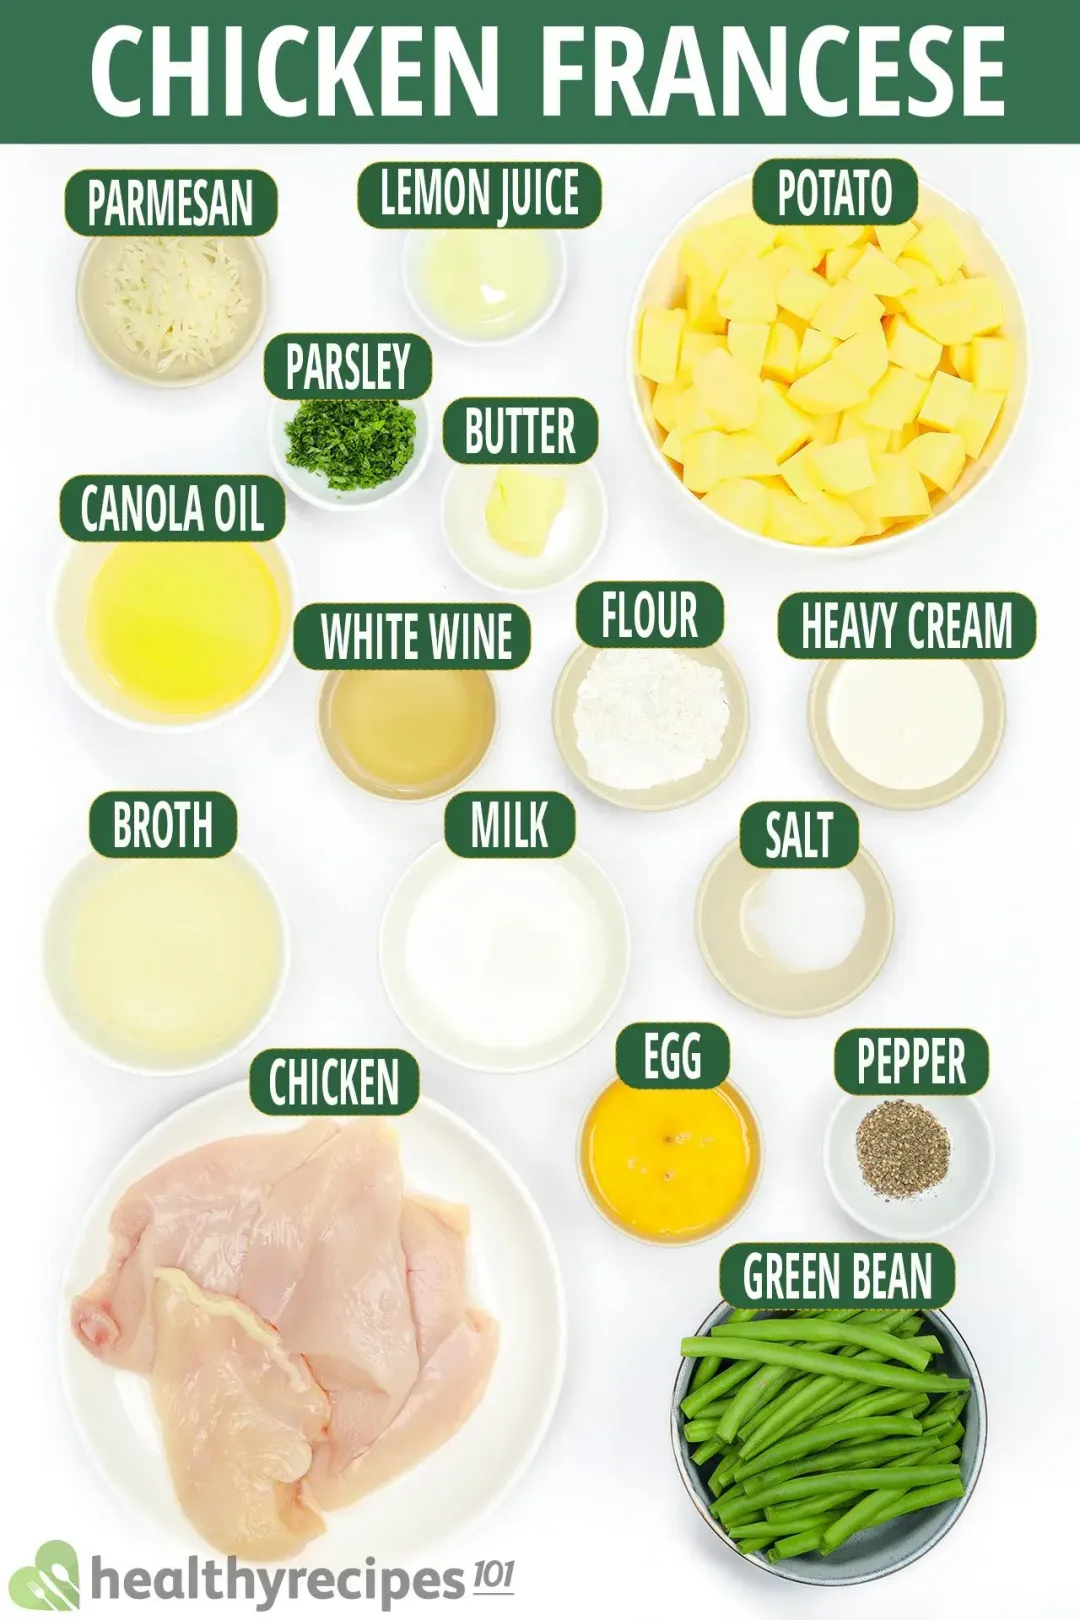 Ingredients for Chicken Francese